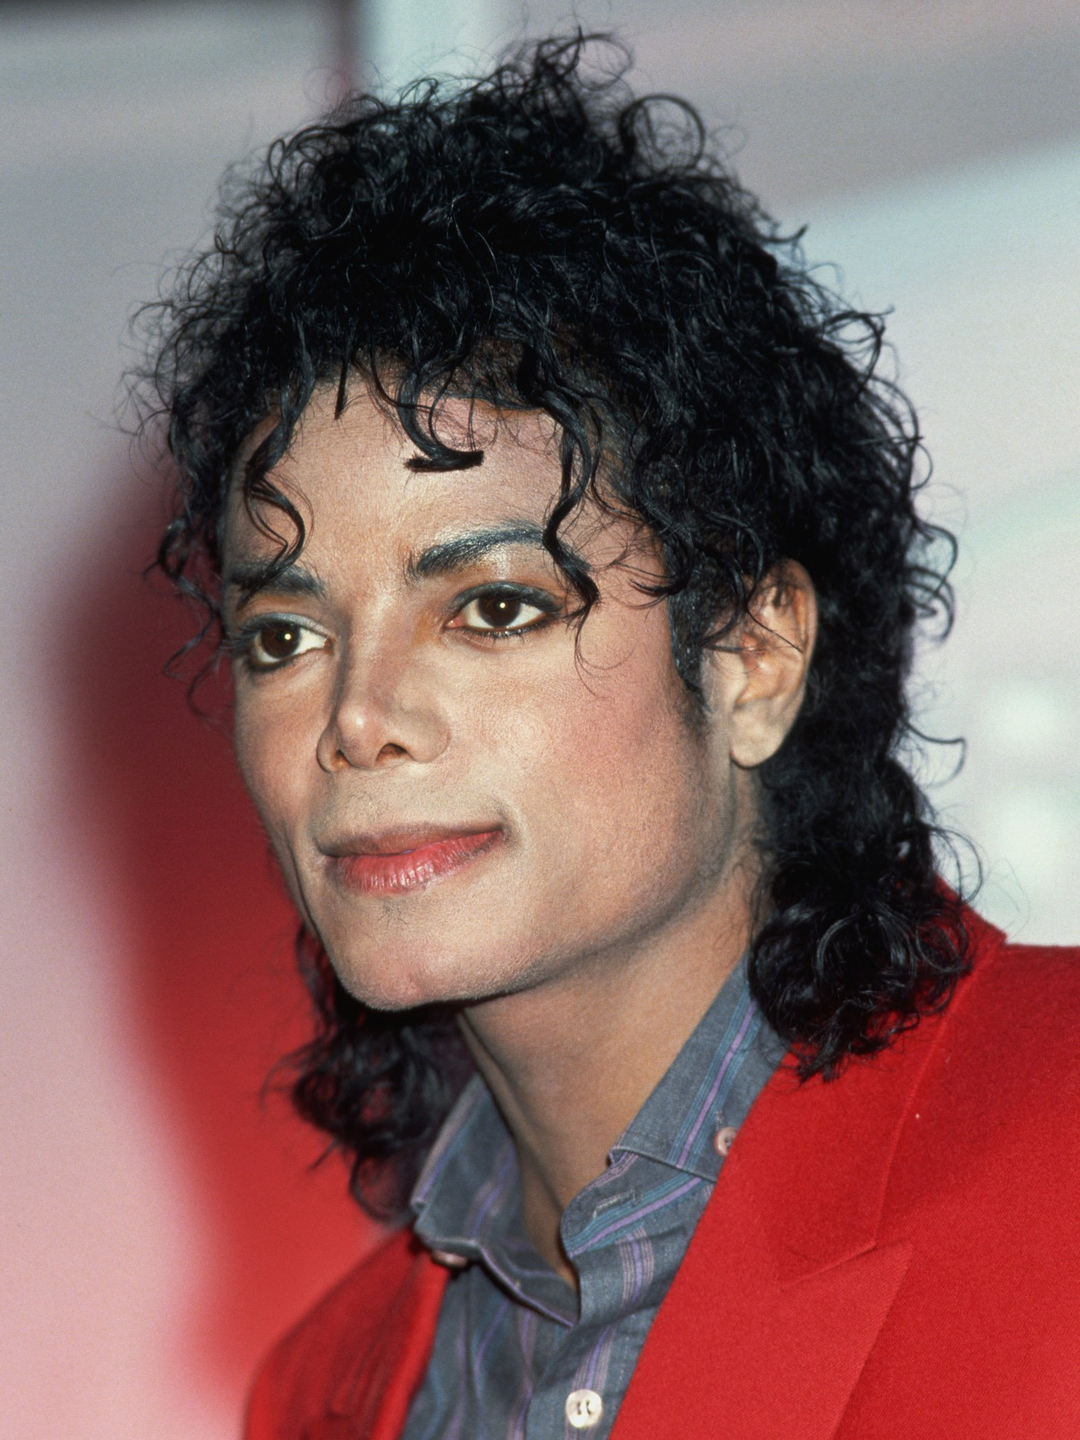 Michael Jackson young photos